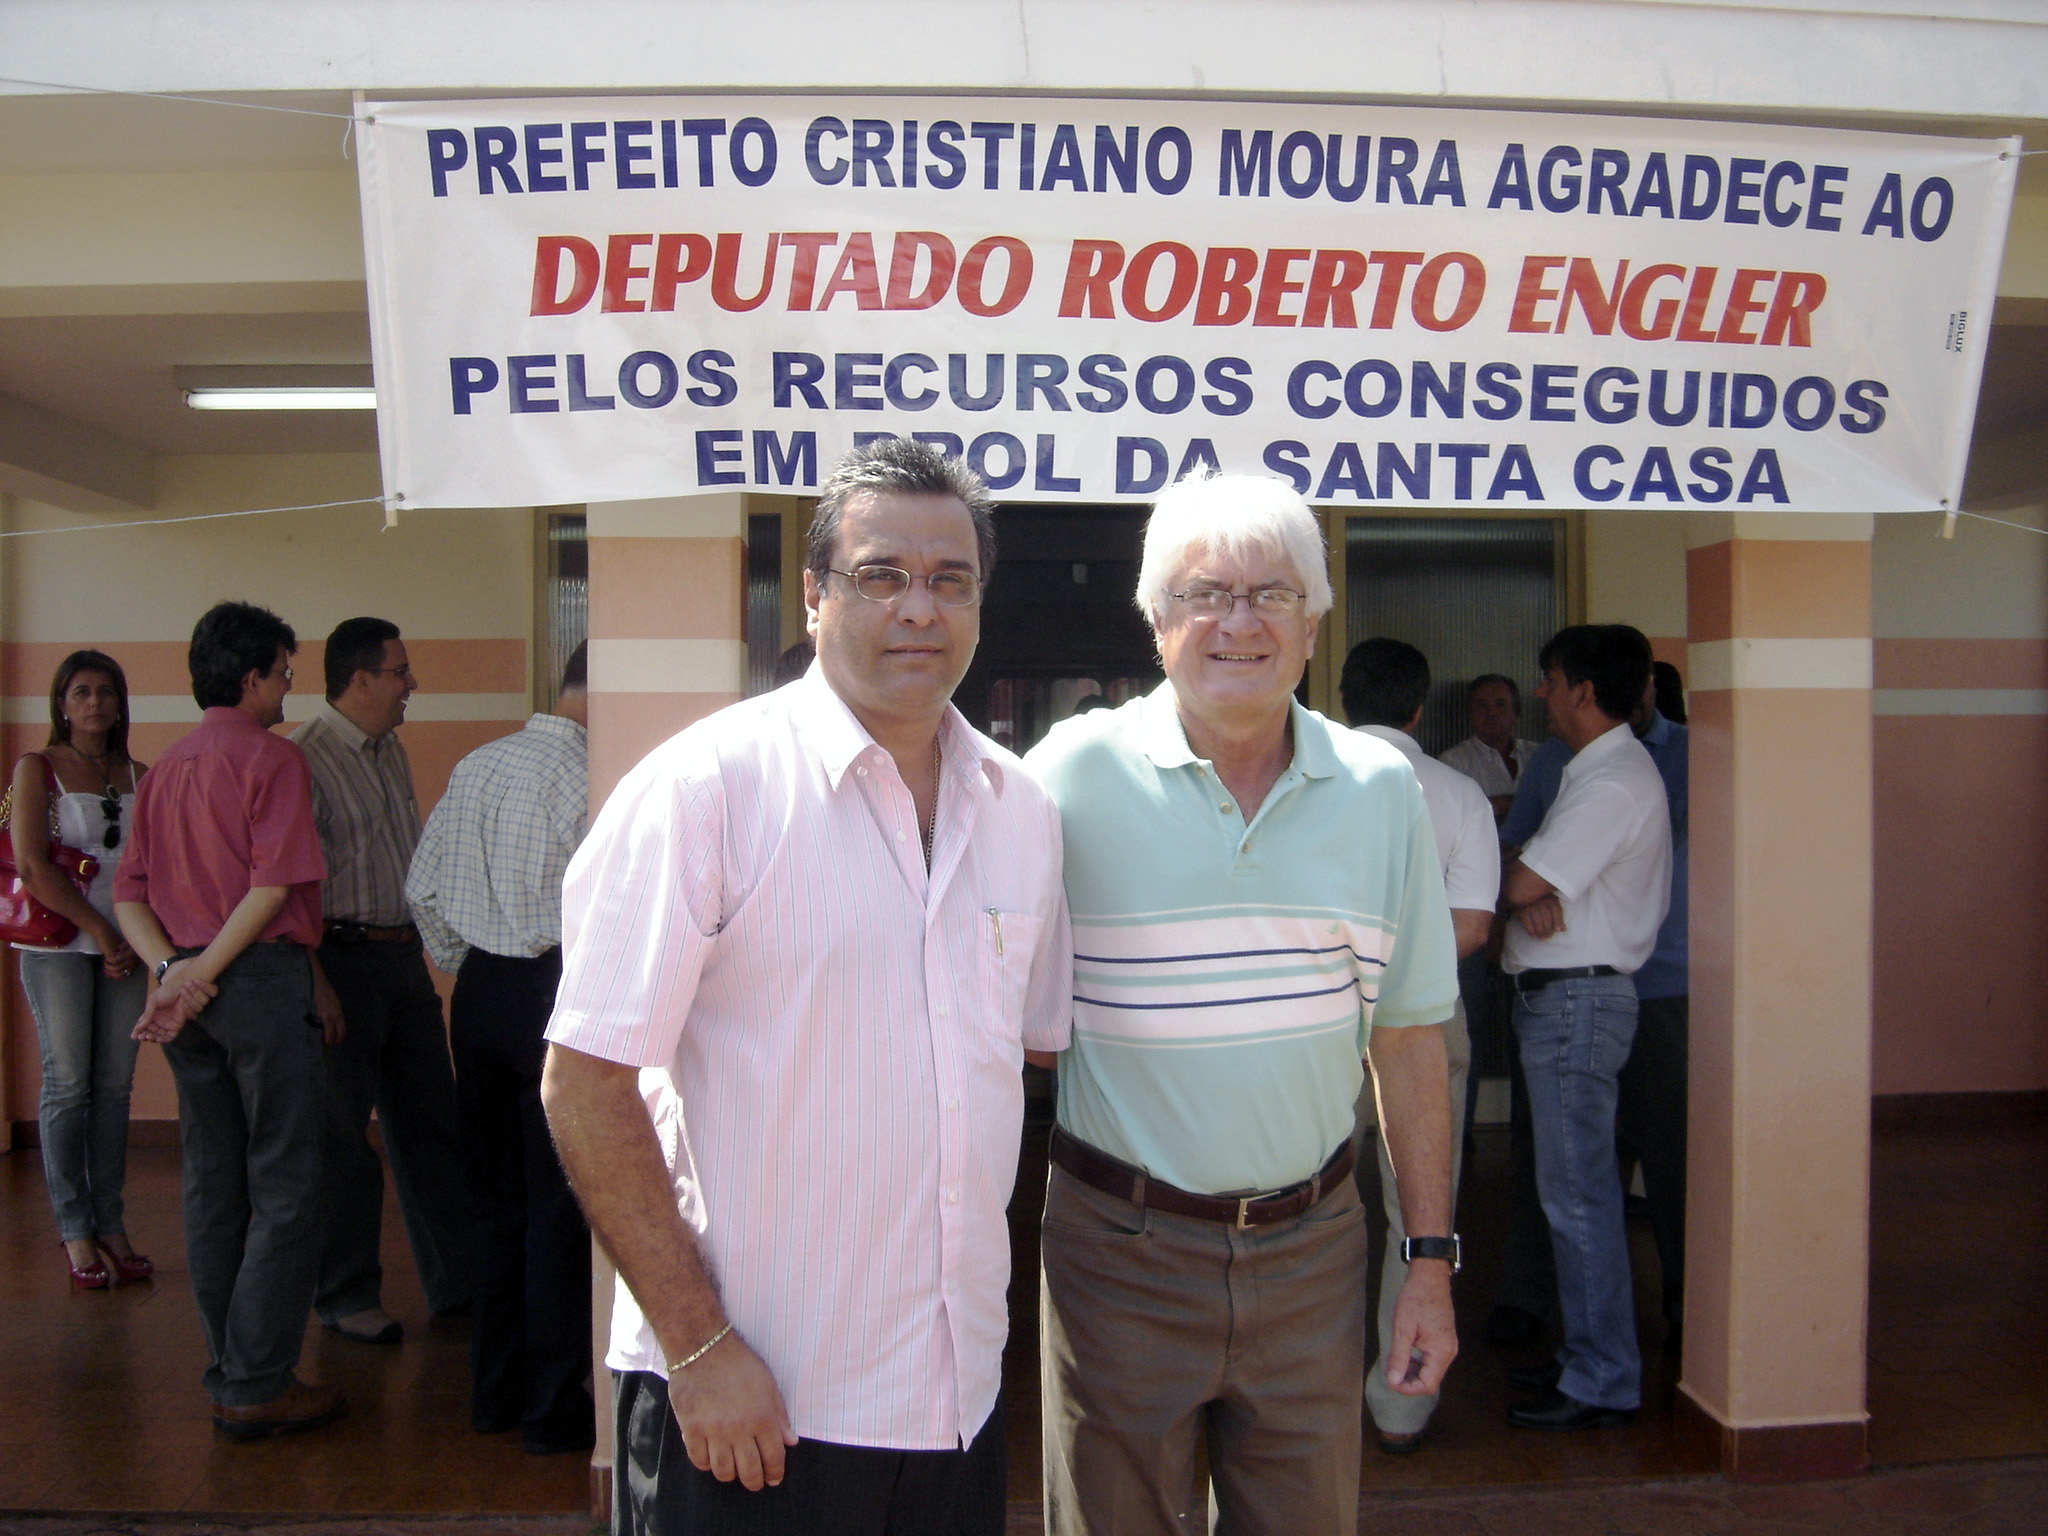 Prefeito Cristiano Barbosa Moura e o deputado Roberto Engler<a style='float:right;color:#ccc' href='https://www3.al.sp.gov.br/repositorio/noticia/03-2008/ENGLER MIGUELOPOLIS.jpg' target=_blank><i class='bi bi-zoom-in'></i> Clique para ver a imagem </a>